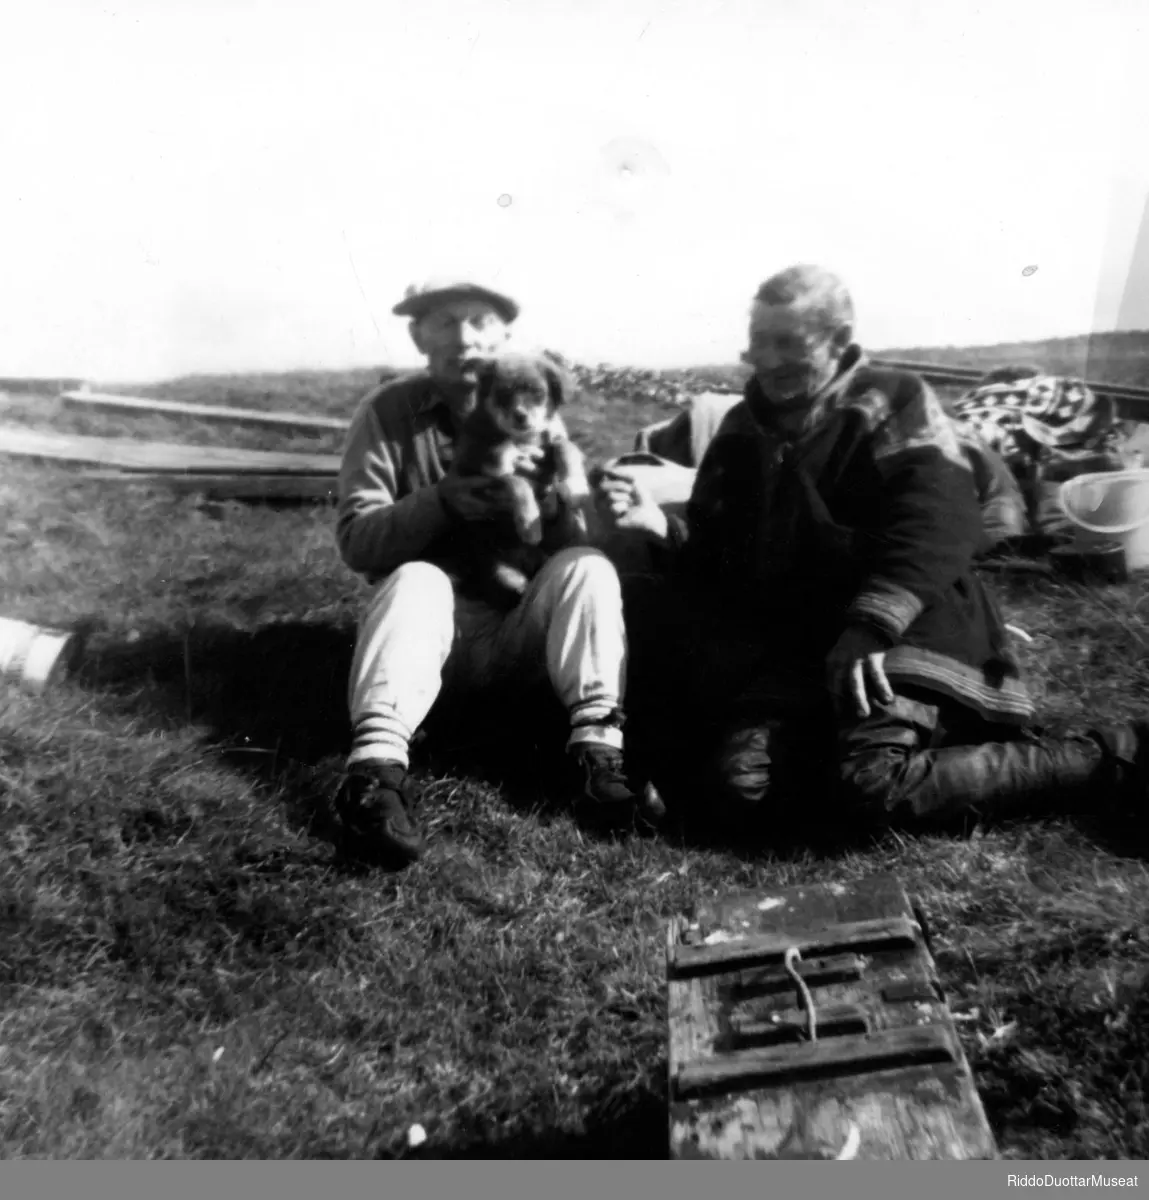 Ánte Bongo ja Eváš Lásse, Antes lea vielppis salas.
Anders Bongo med en valp i fanget og Lars L. Gaino på fjellet.